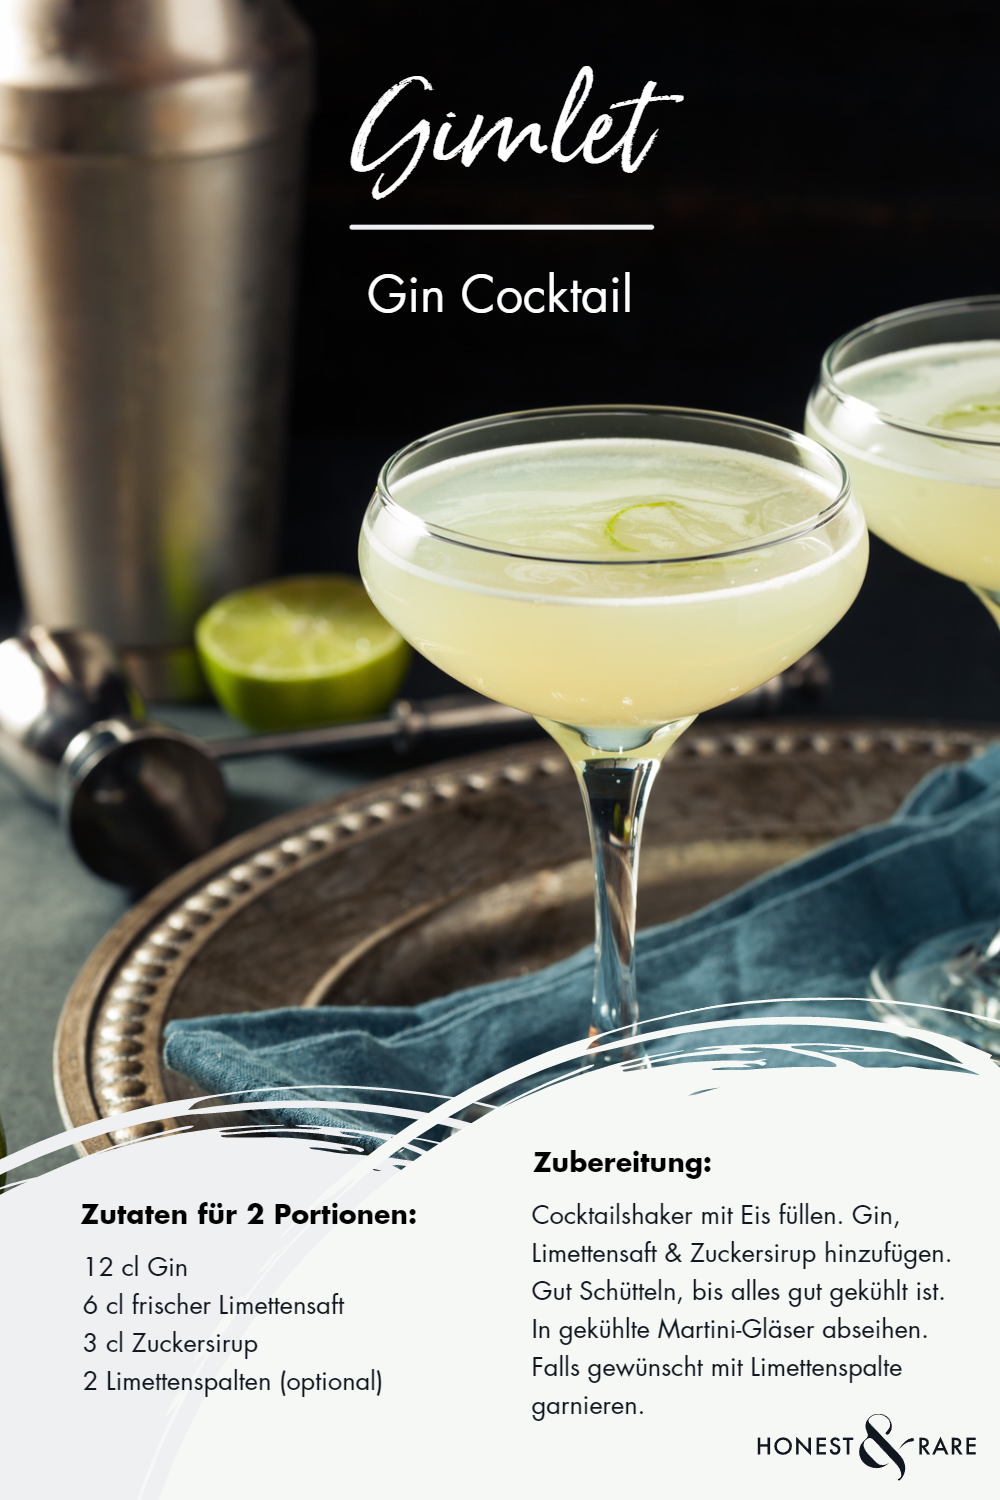 Gimlet - das Rezept zum Gin Cocktail